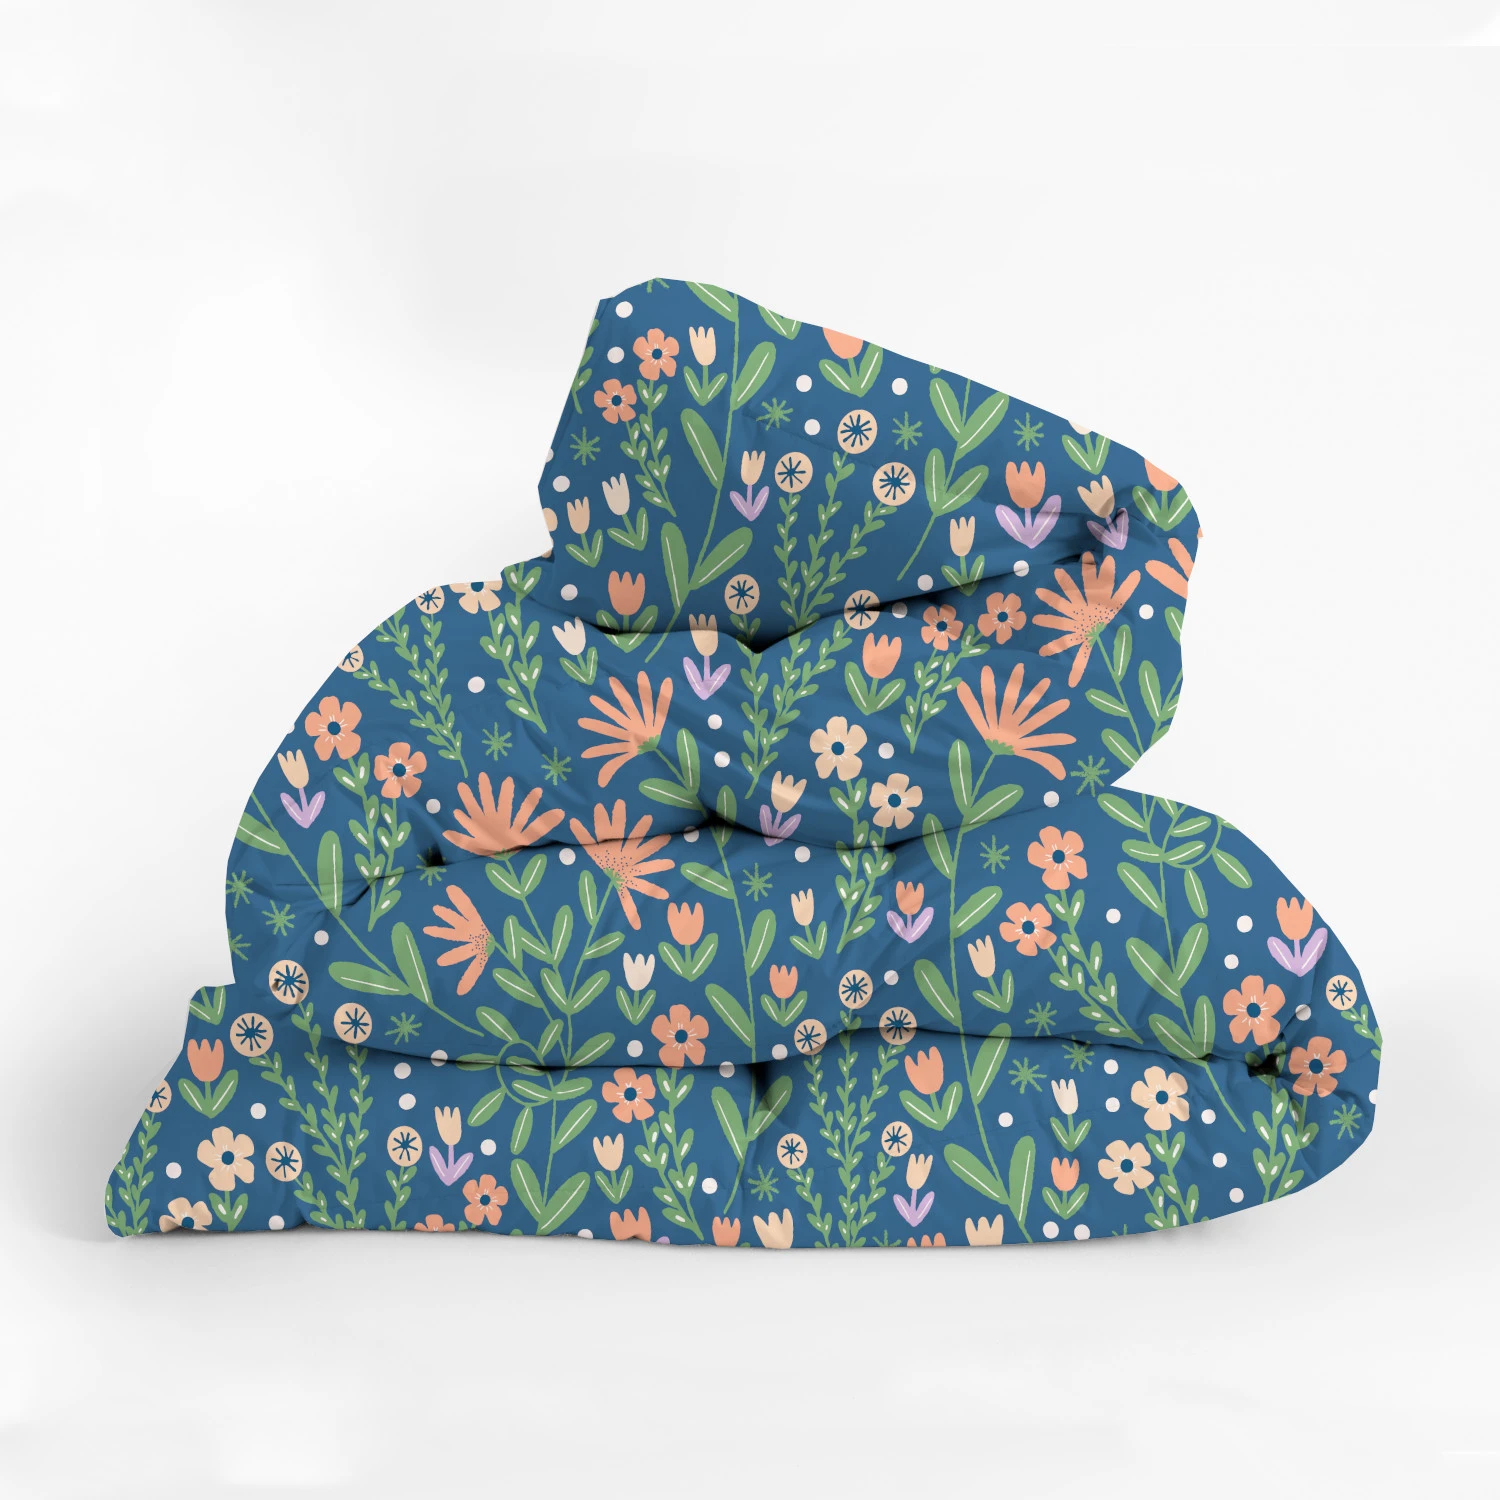 198-comforter-mockupblue-floral-meadow-16811589527475.jpg